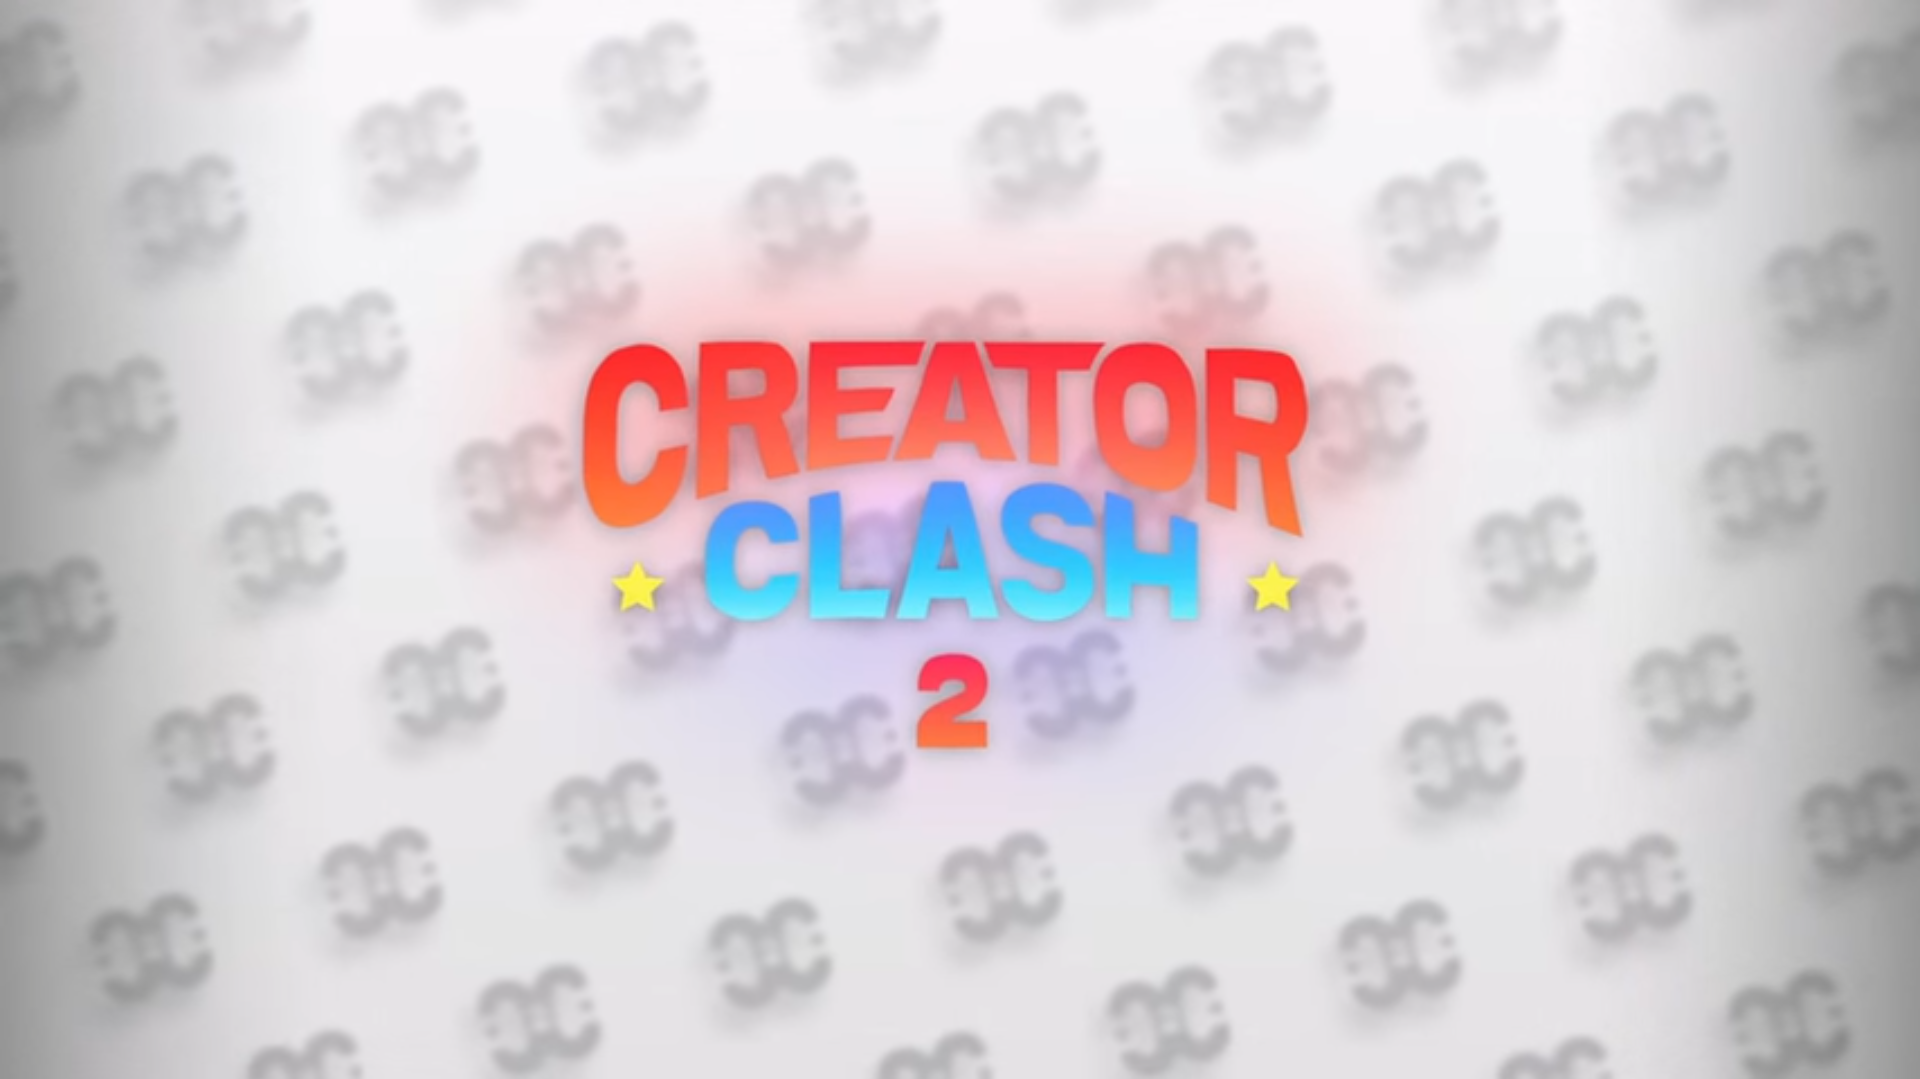 Creator Clash 2 full fight card including iDubbbz vs Alex Wassabi - Mirror  Online